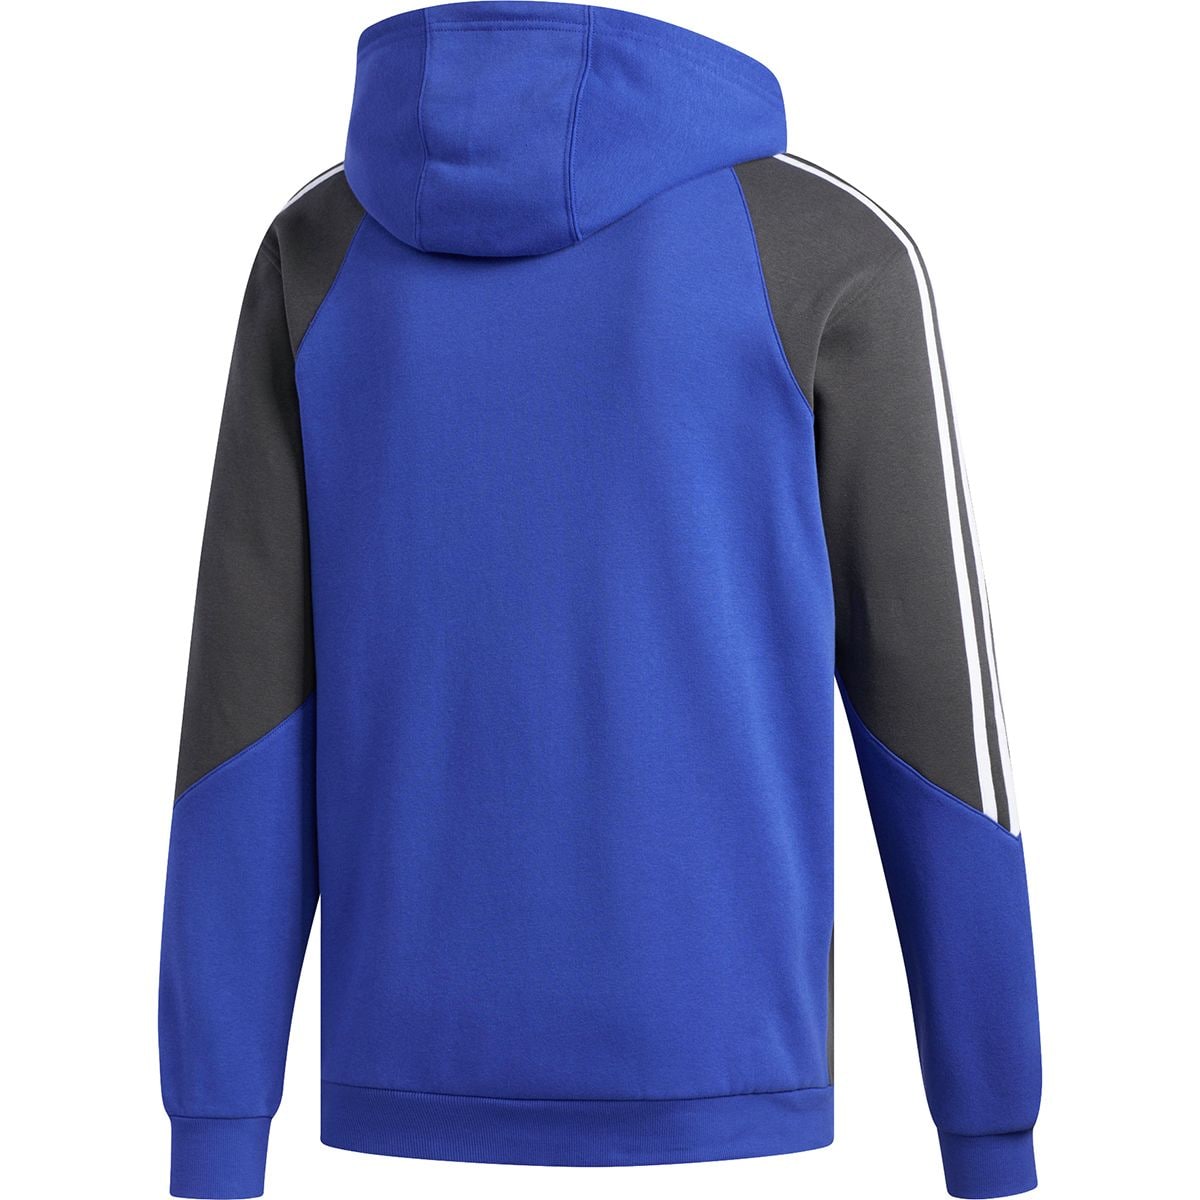 Adidas Pullover - Men's - Clothing